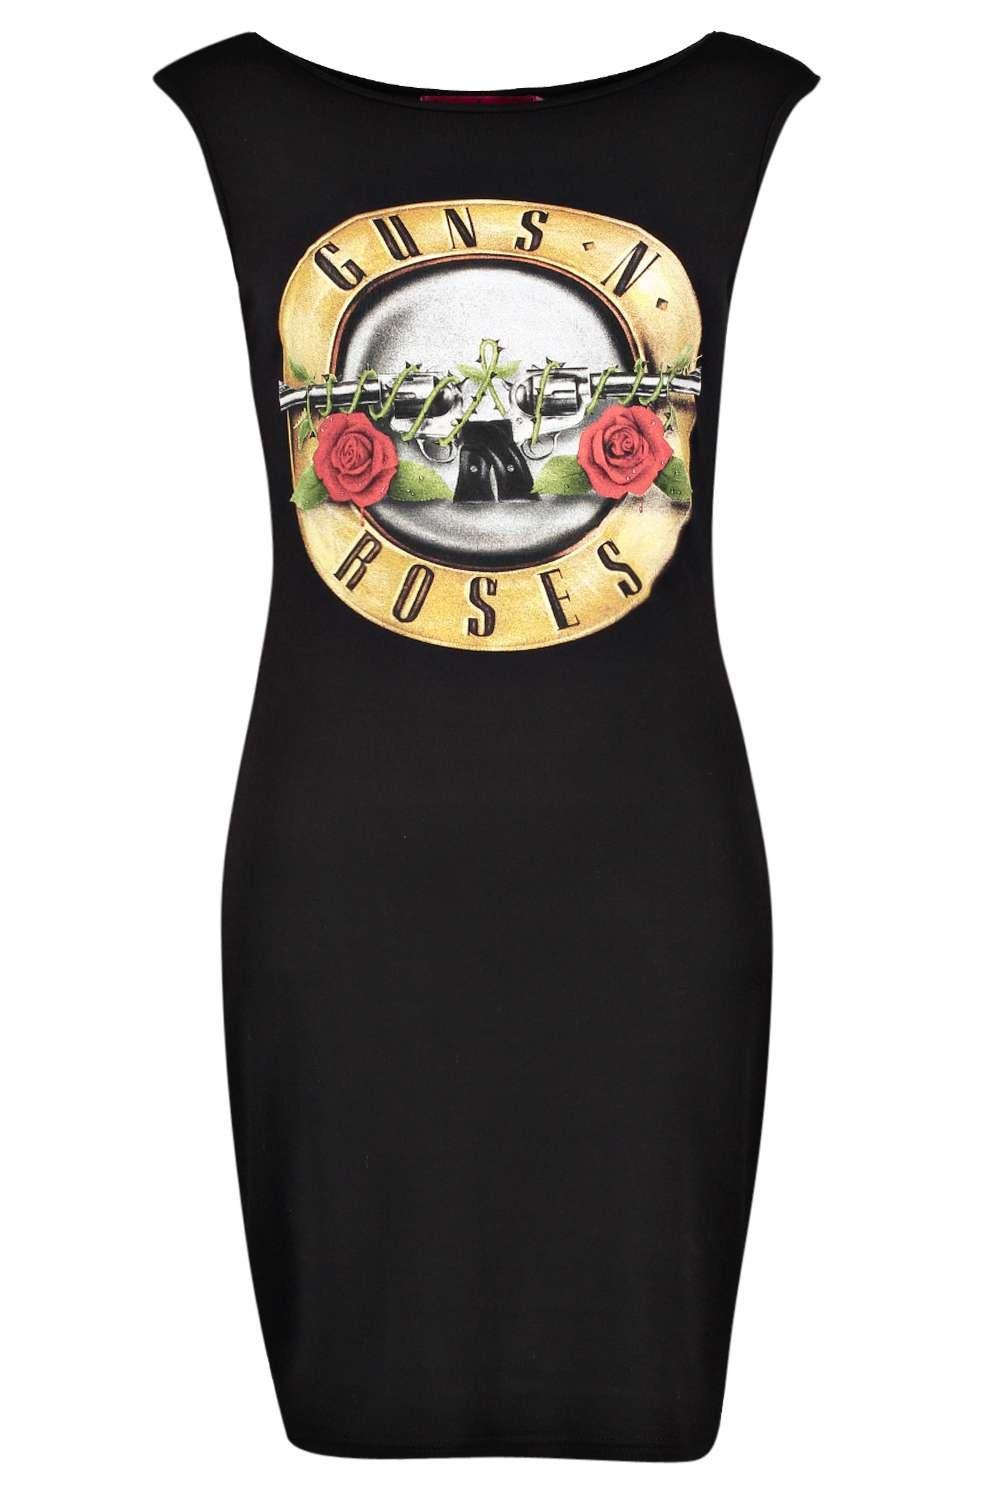 Boohoo Synthetic Guns N Roses Bodycon Dress in Black - Lyst